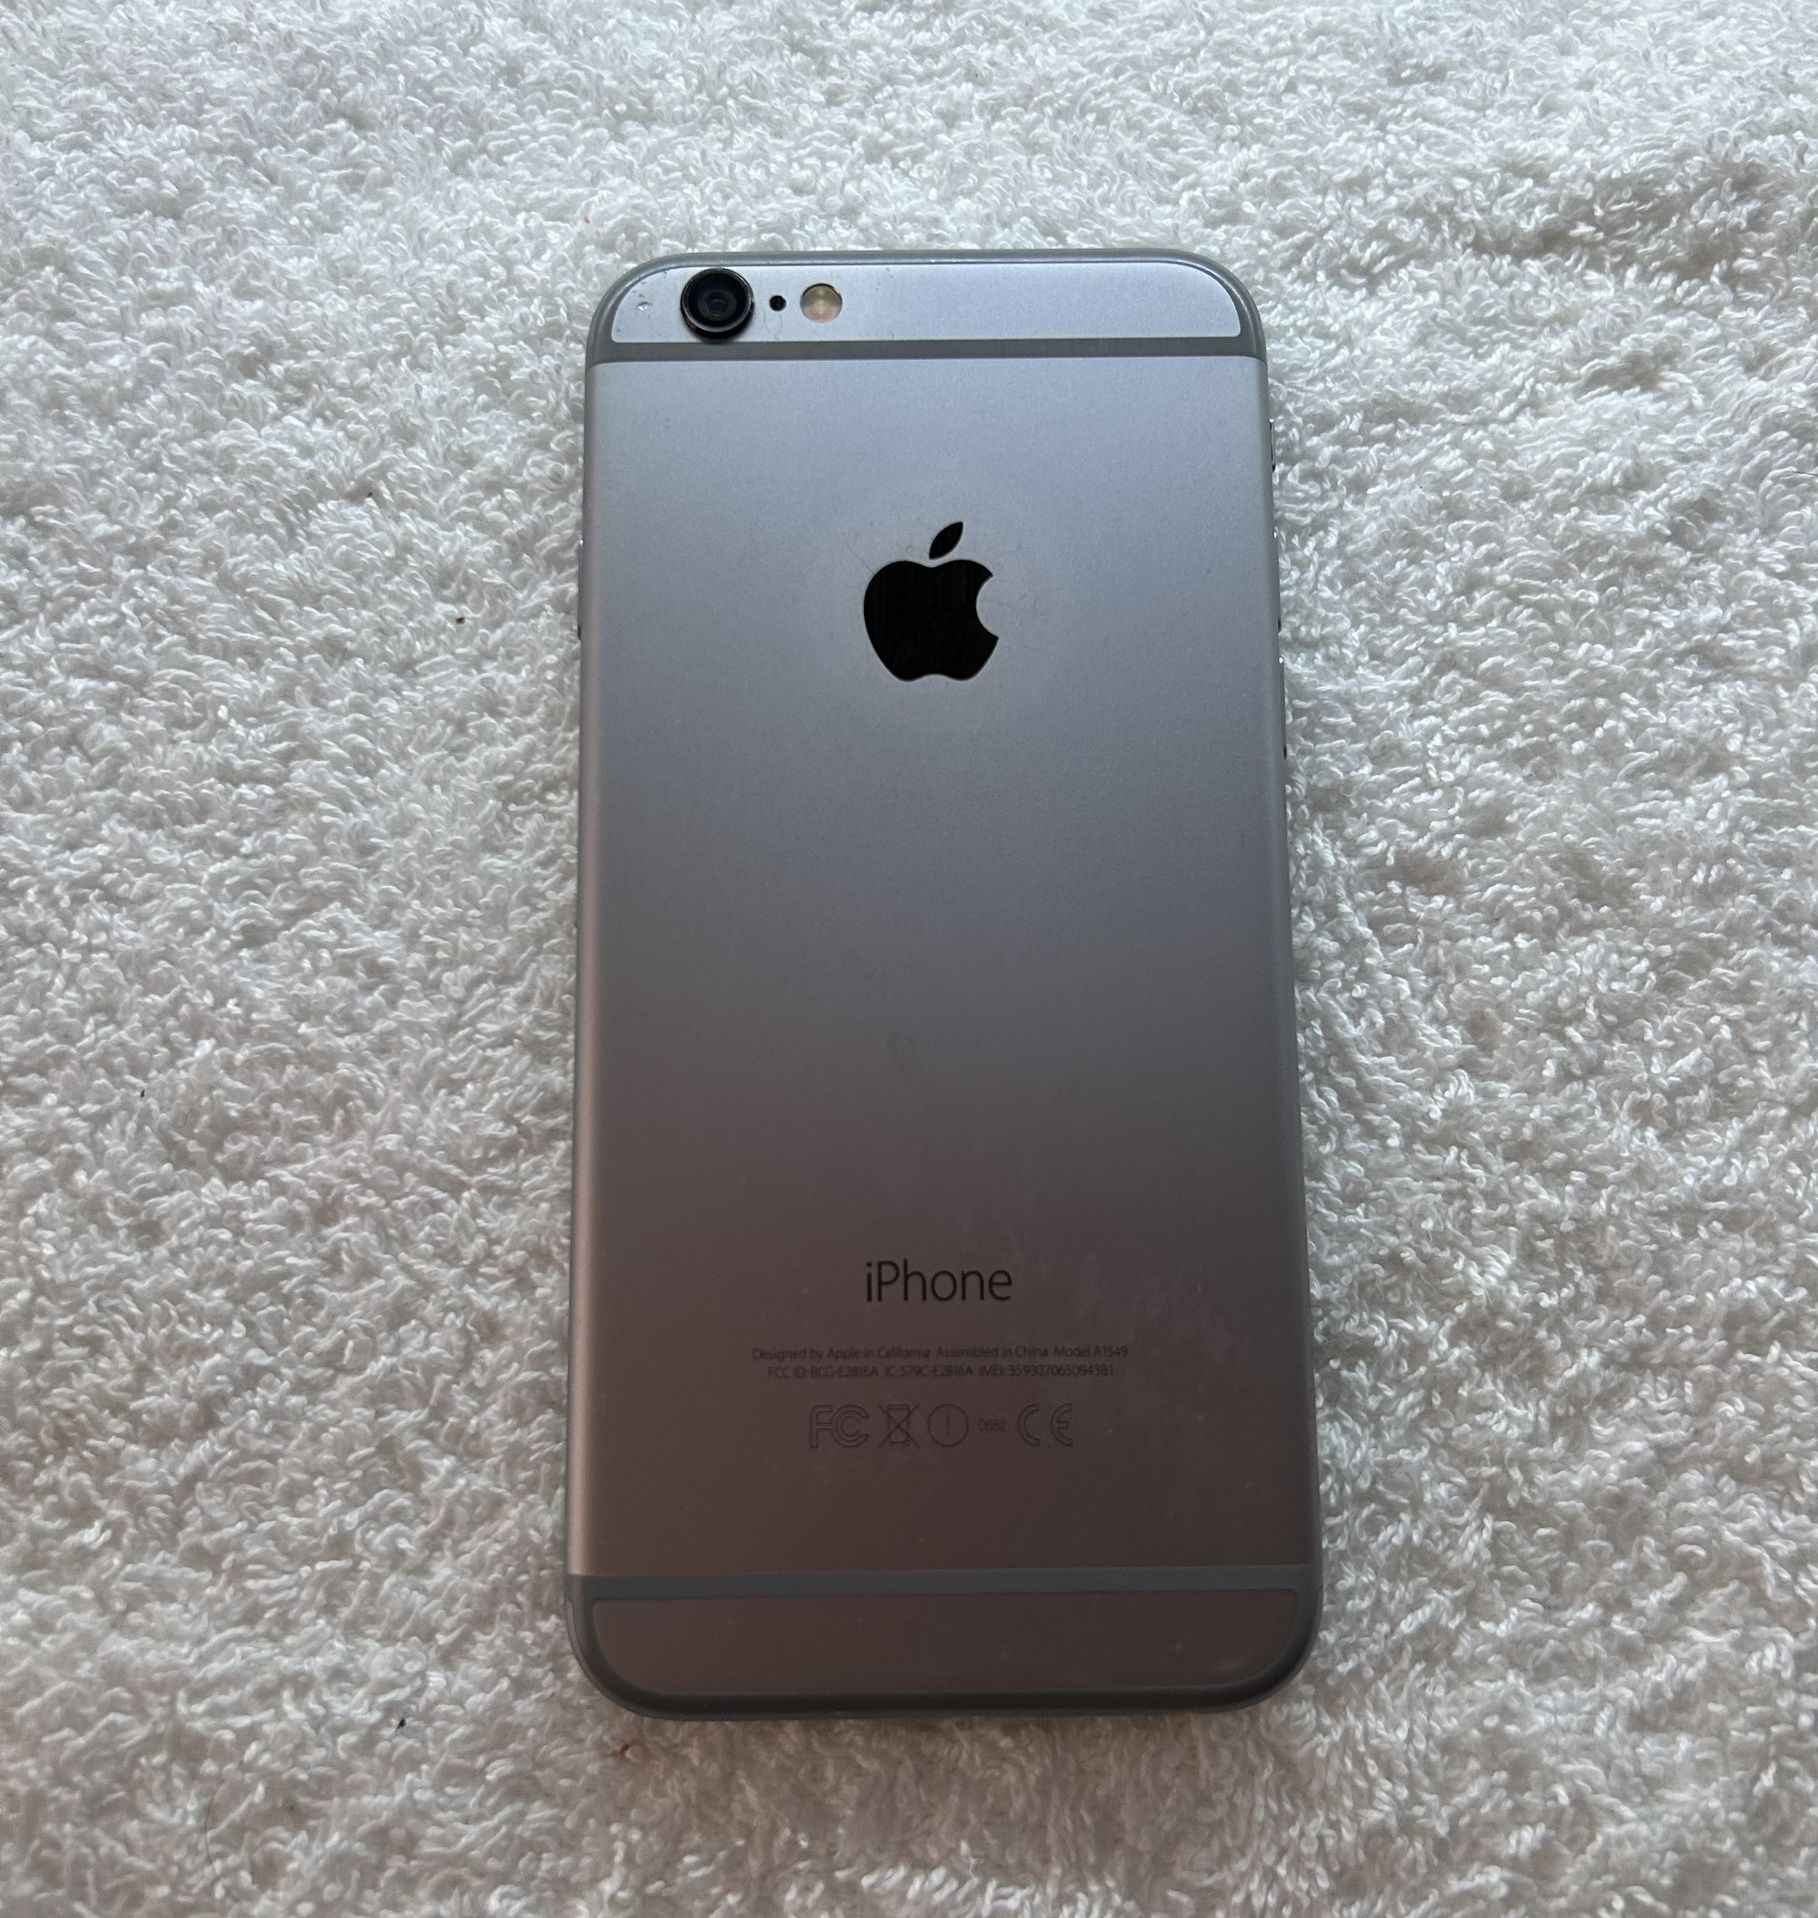 iPhone 6 - 16GB - Silver (Unlocked)